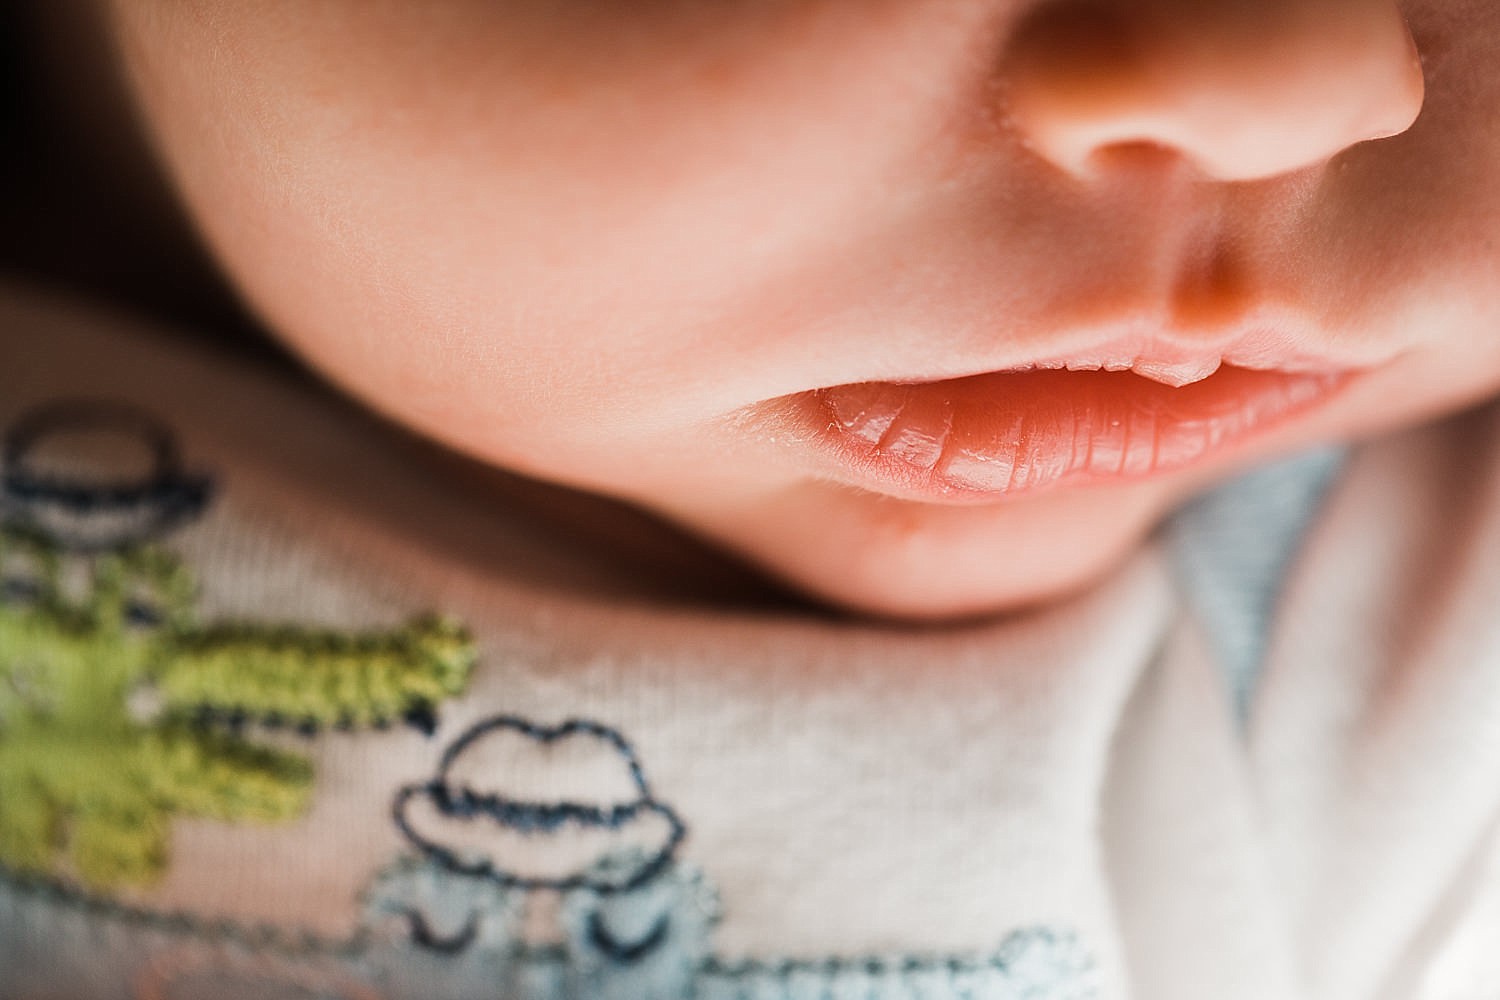  Close up image of newborn baby lips. 